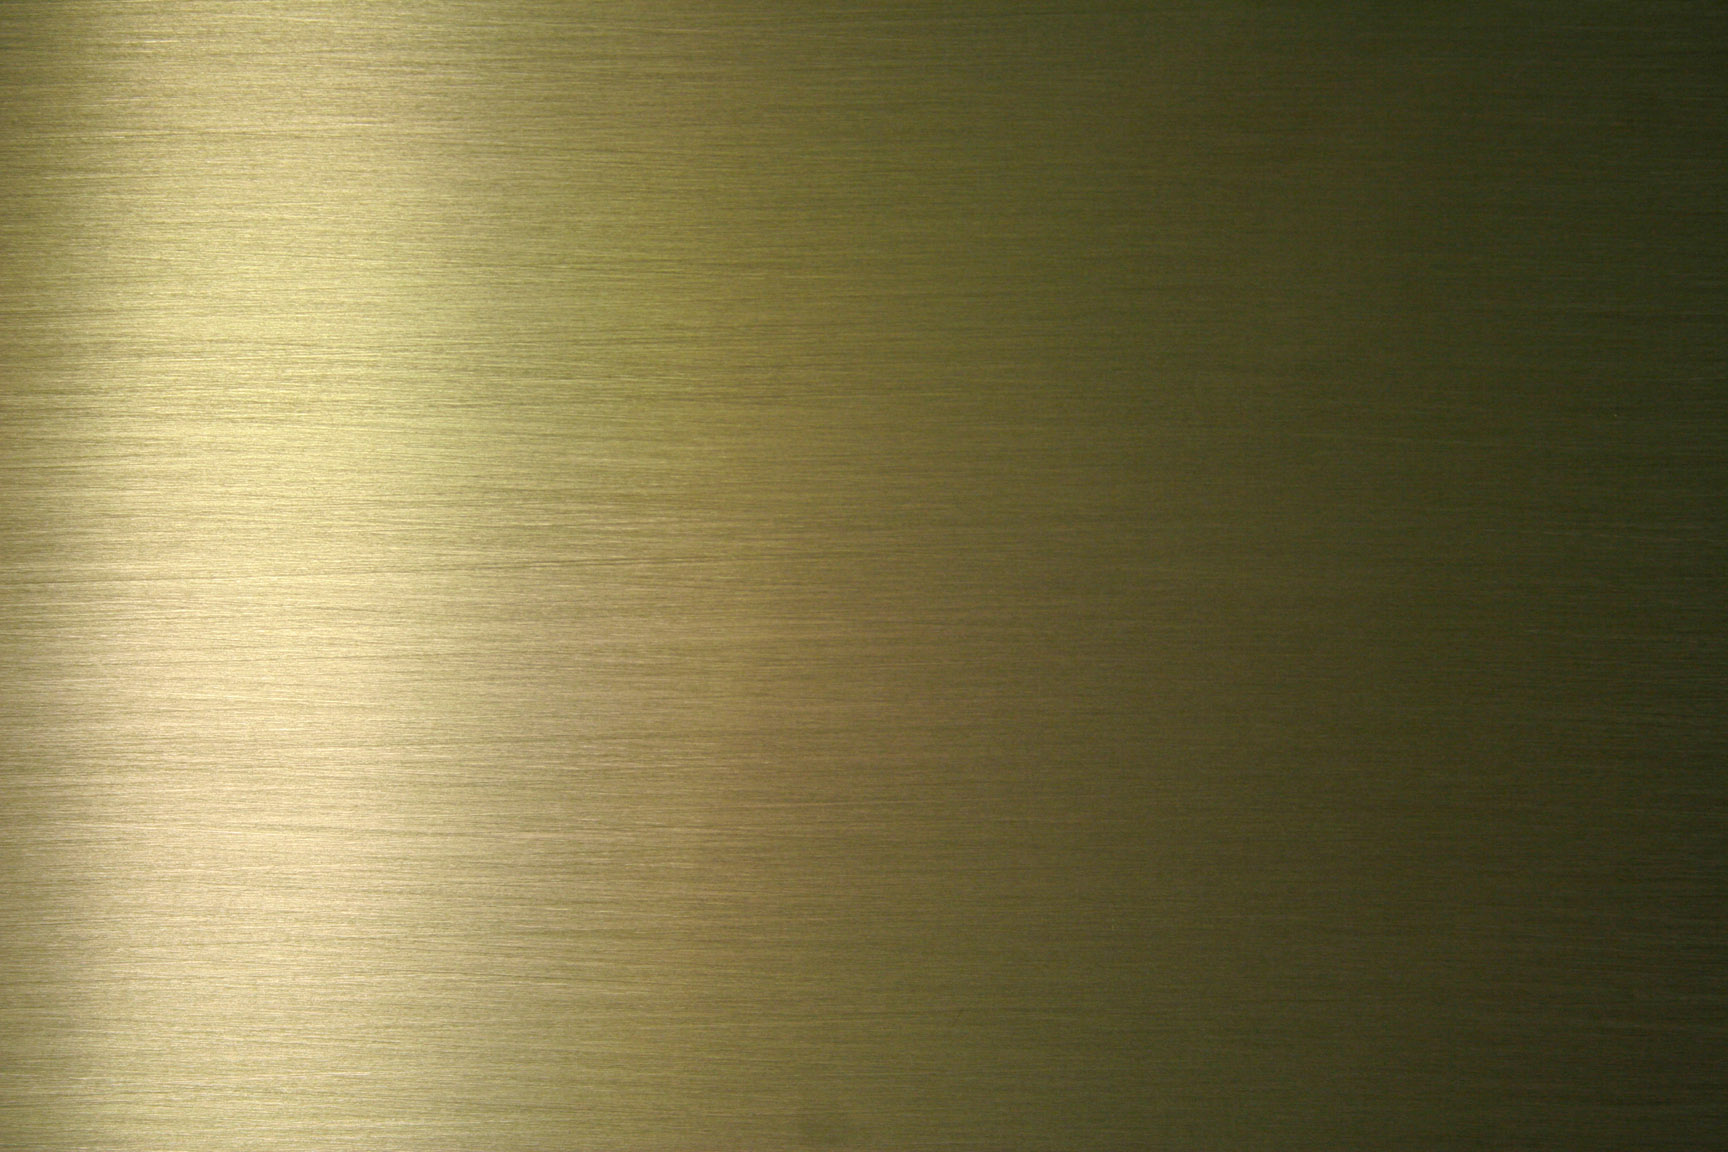 Matte Gold Metal Texture 1728x1152 Wallpaper Teahub Io